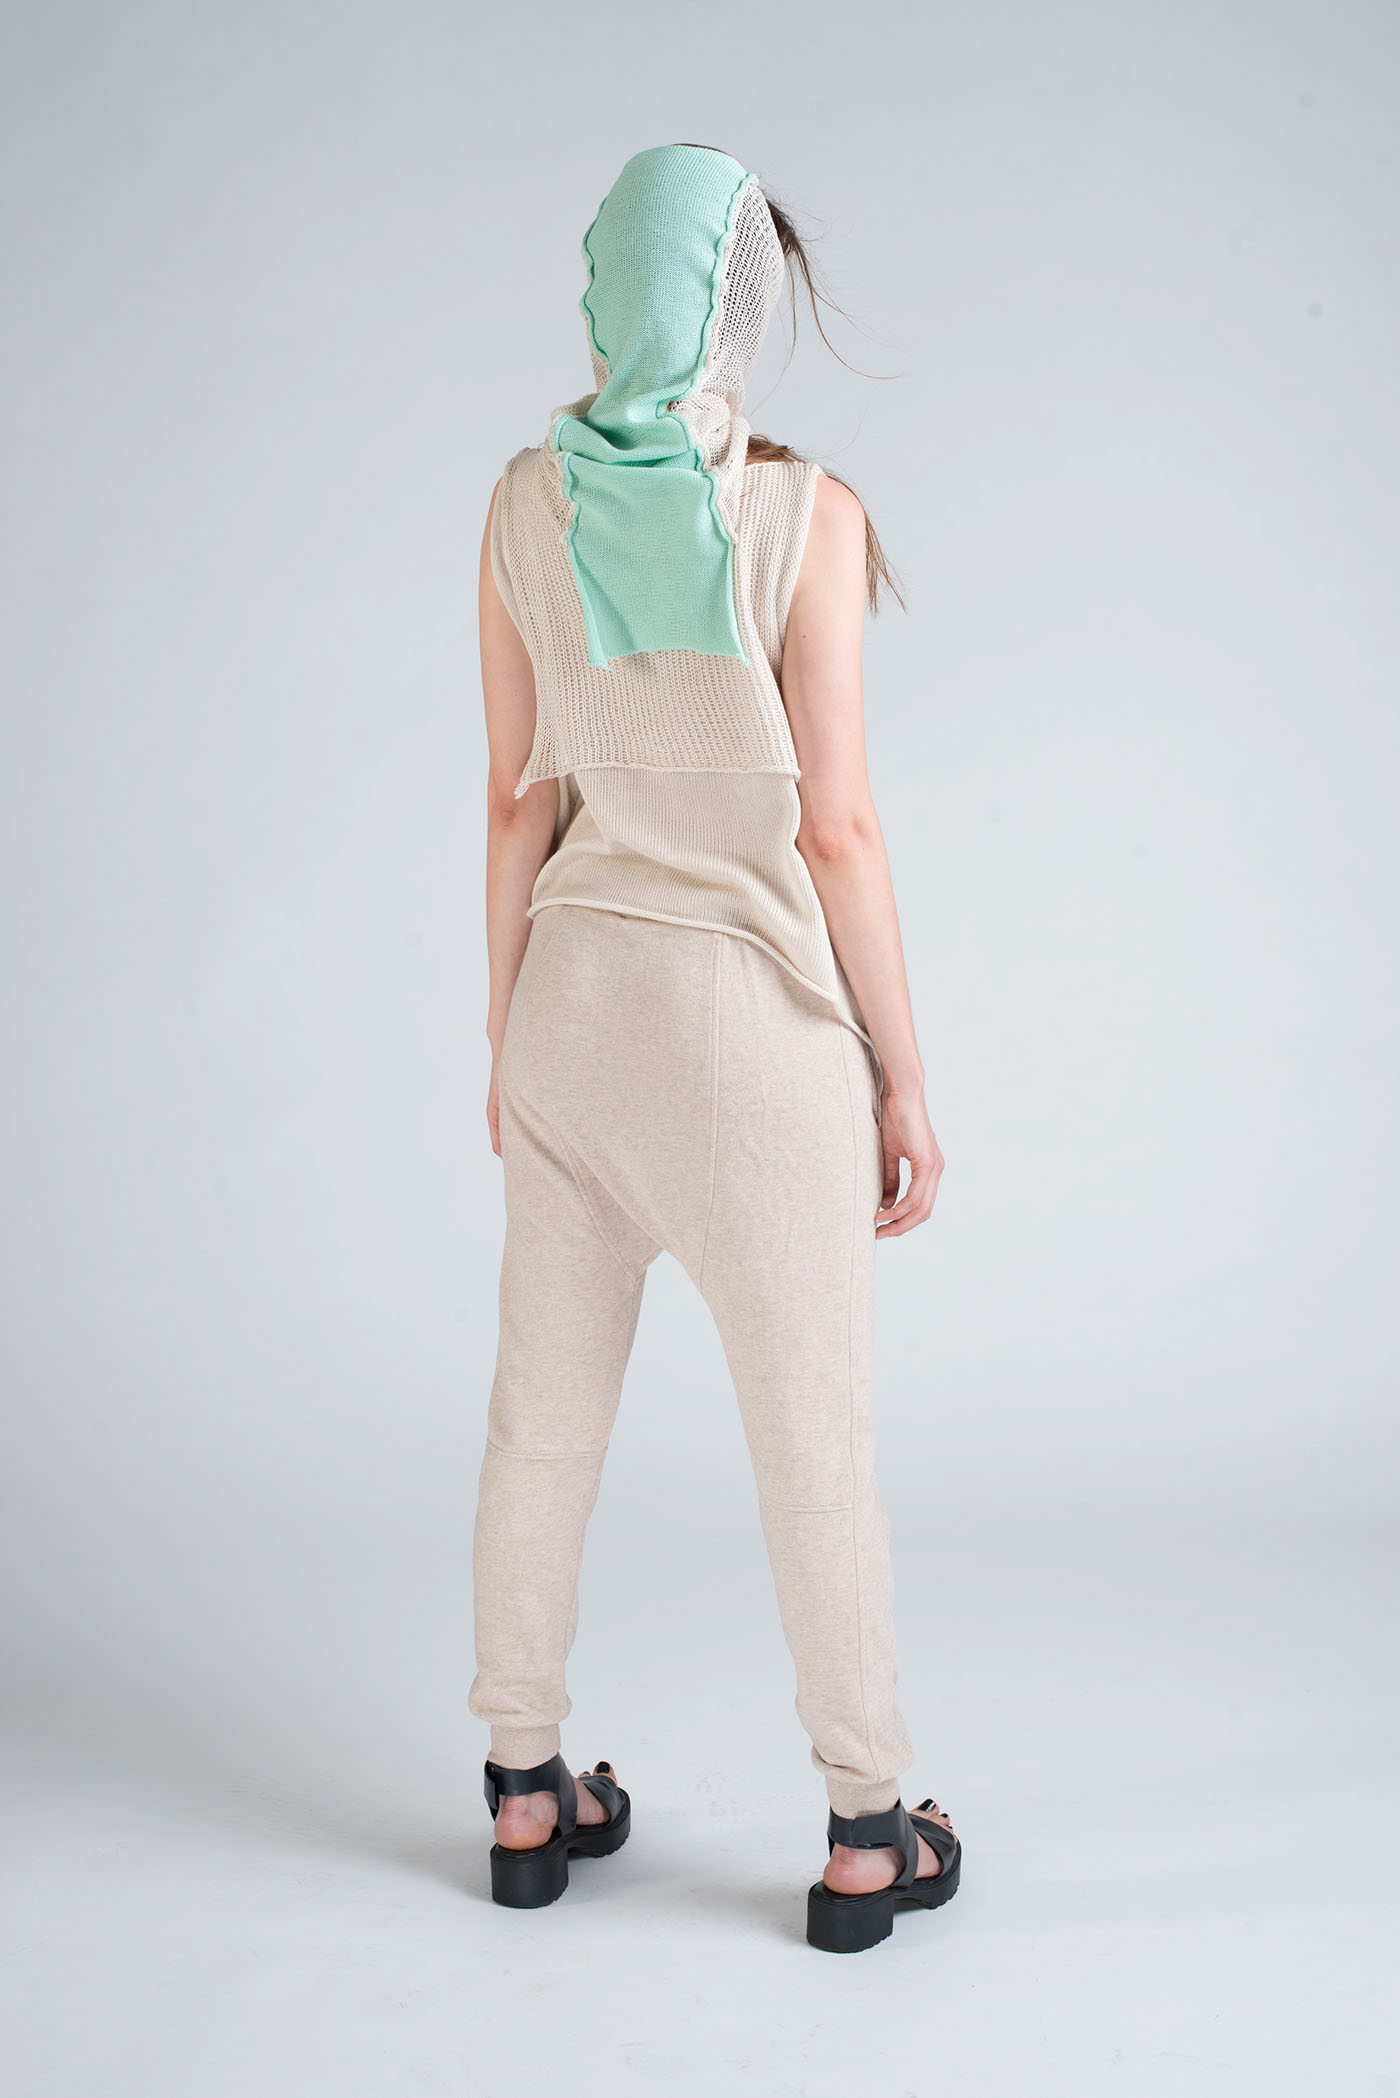 Cyberpunk conceptfashion futuristic knitwear Minimalism streetstyle Urban endependentfashion contemporary Apokalypse